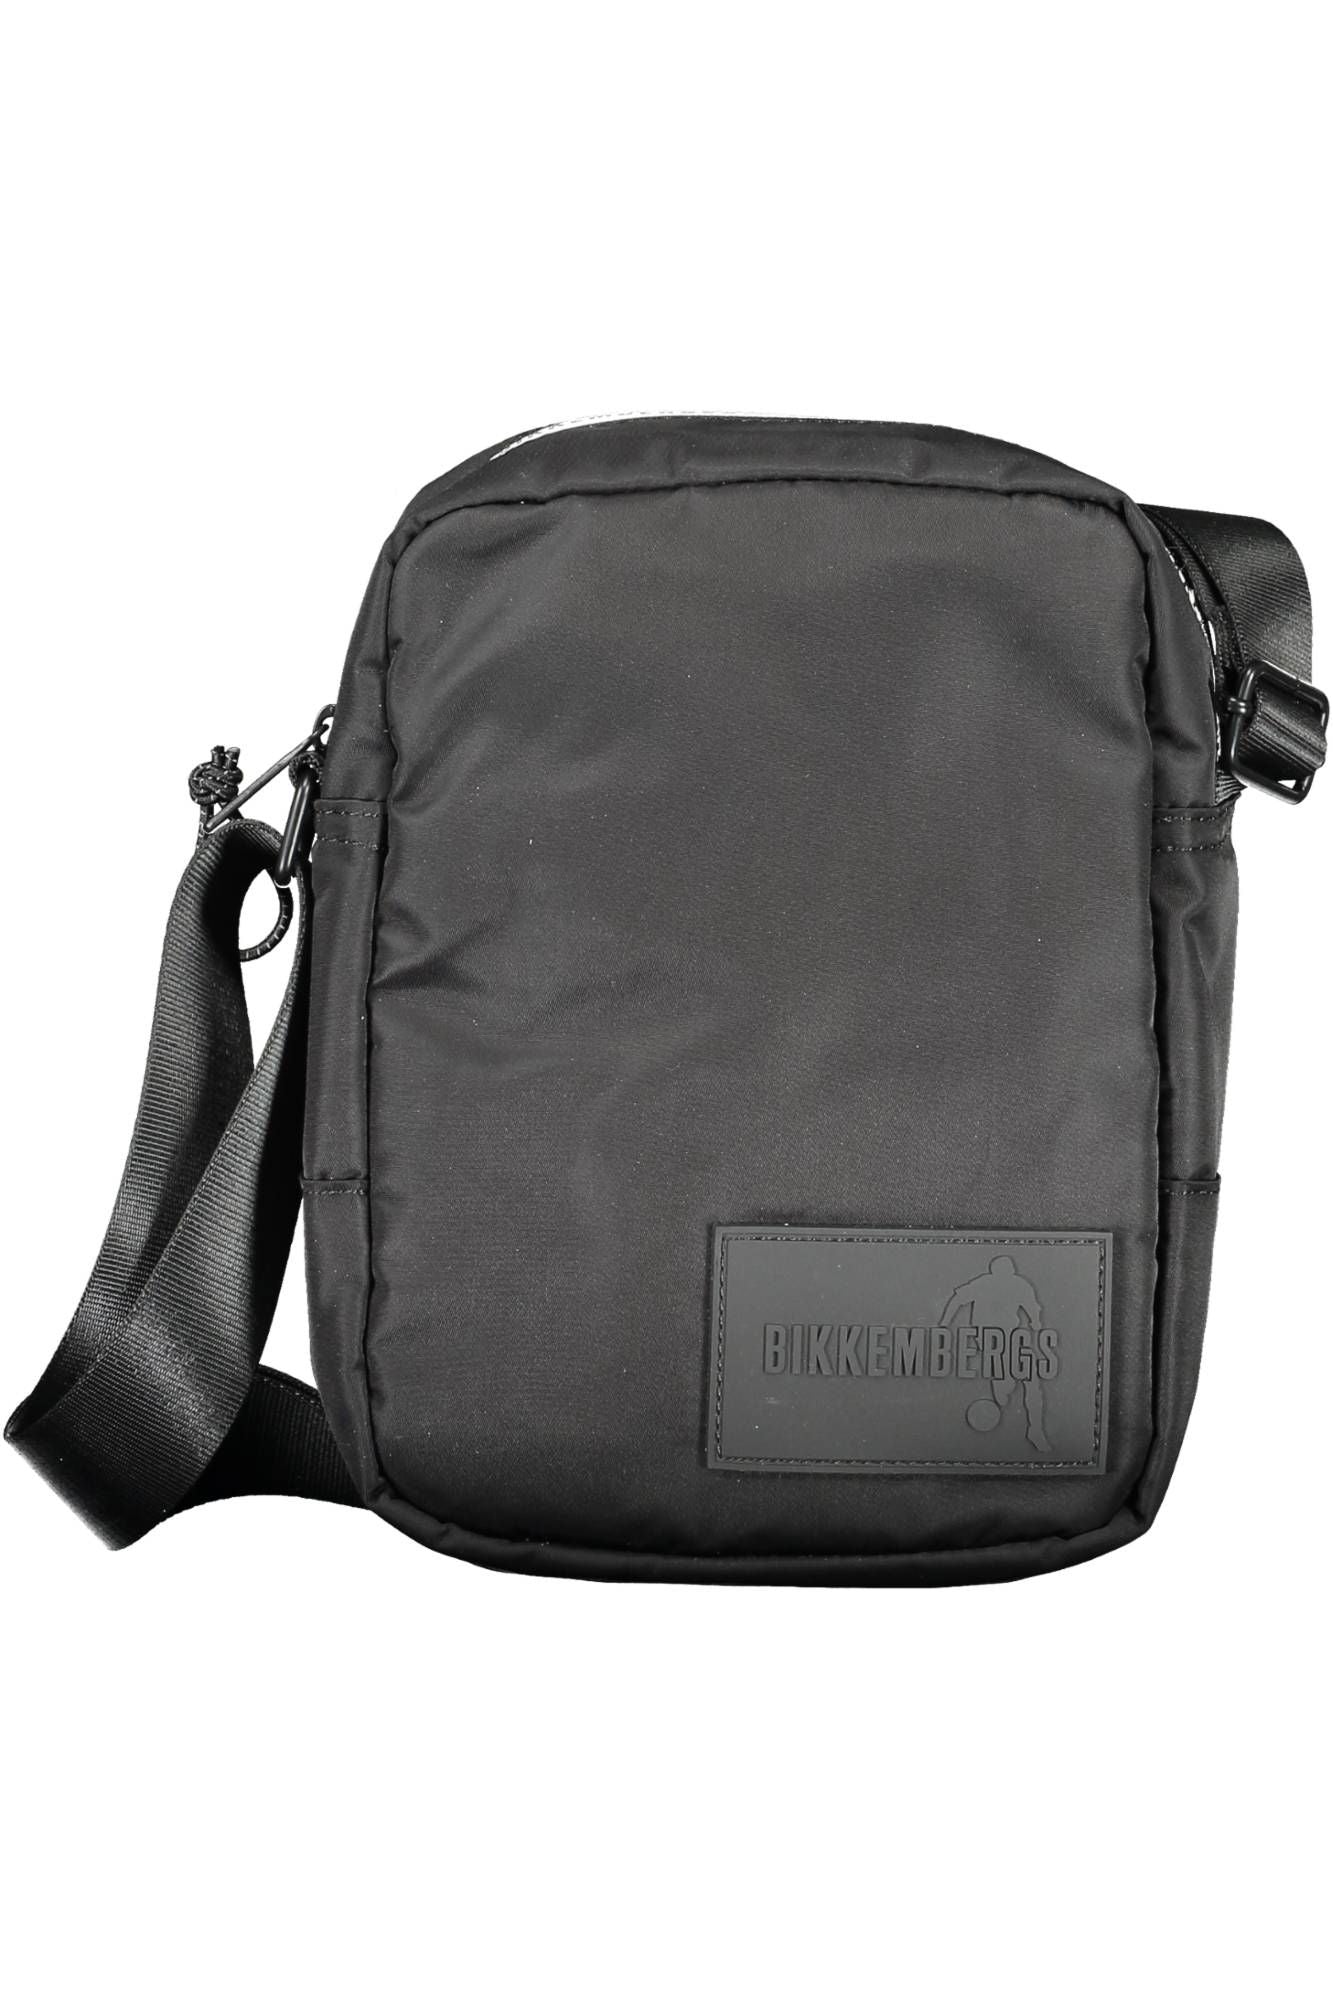 Sleek Black Nylon Shoulder Bag with Logo Detail